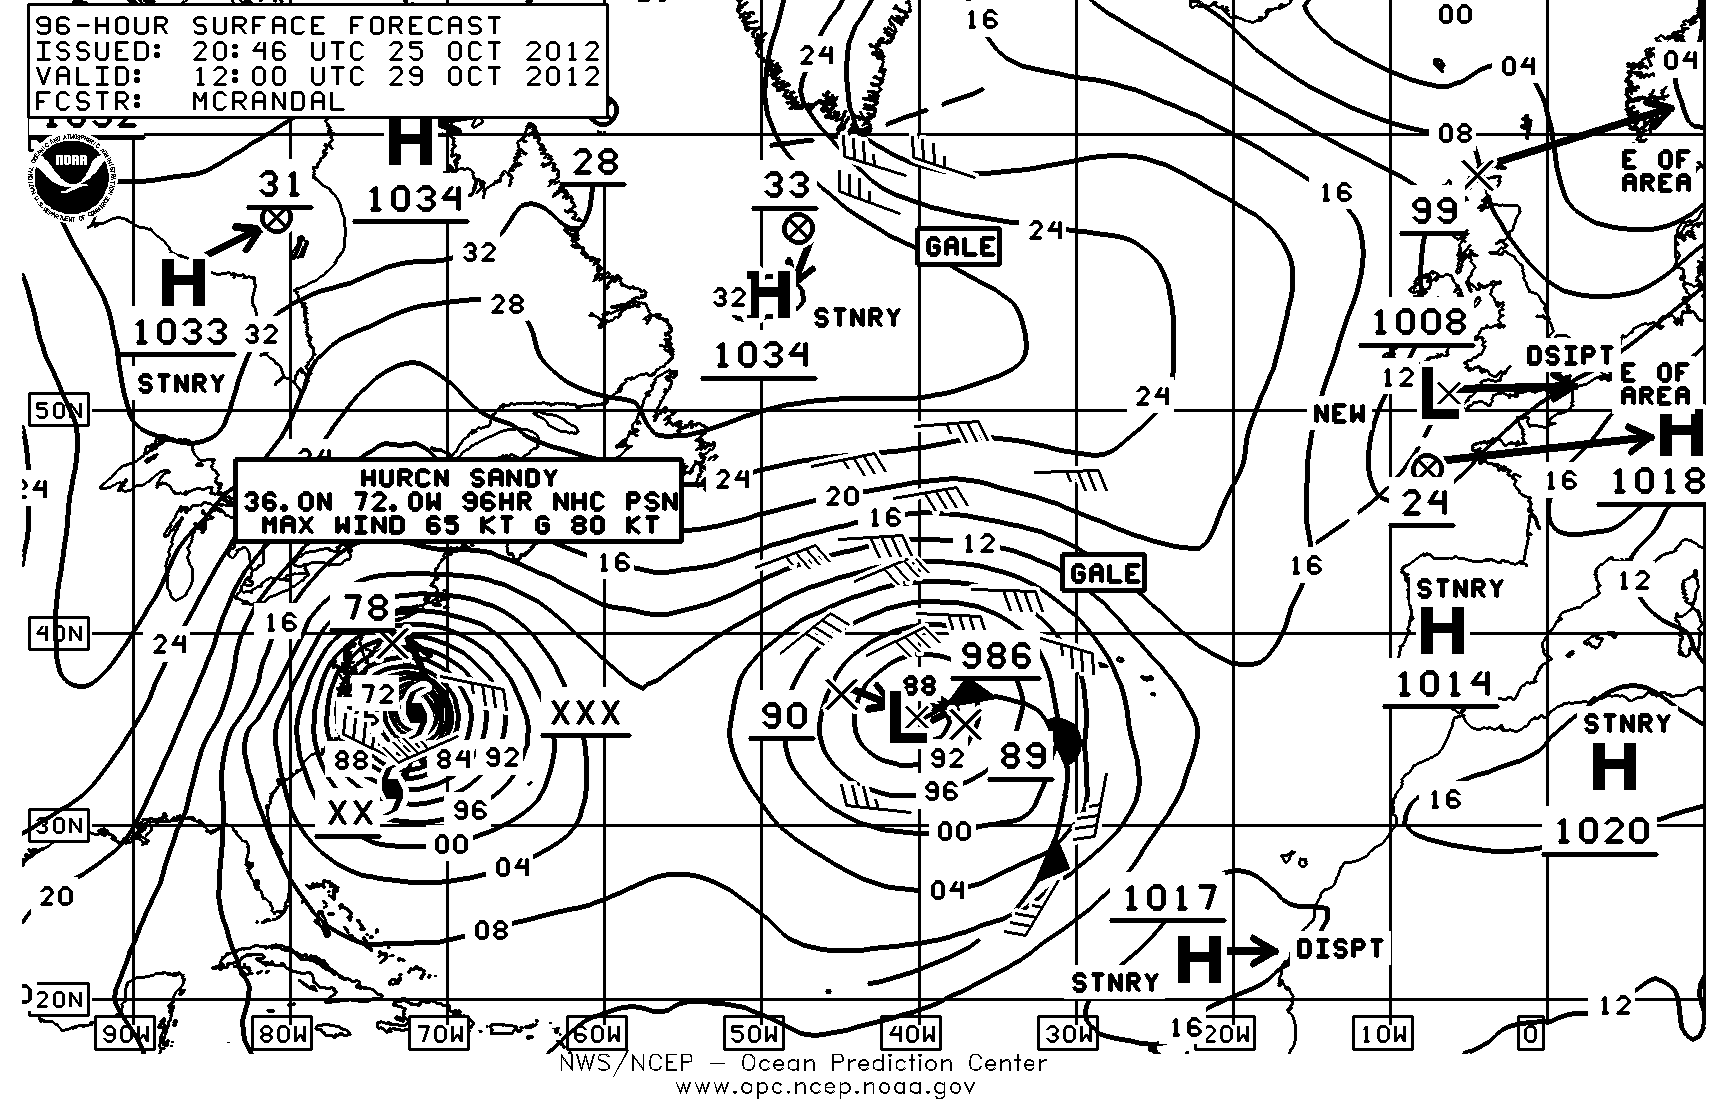 48 Hour Atlantic Surface Forecast